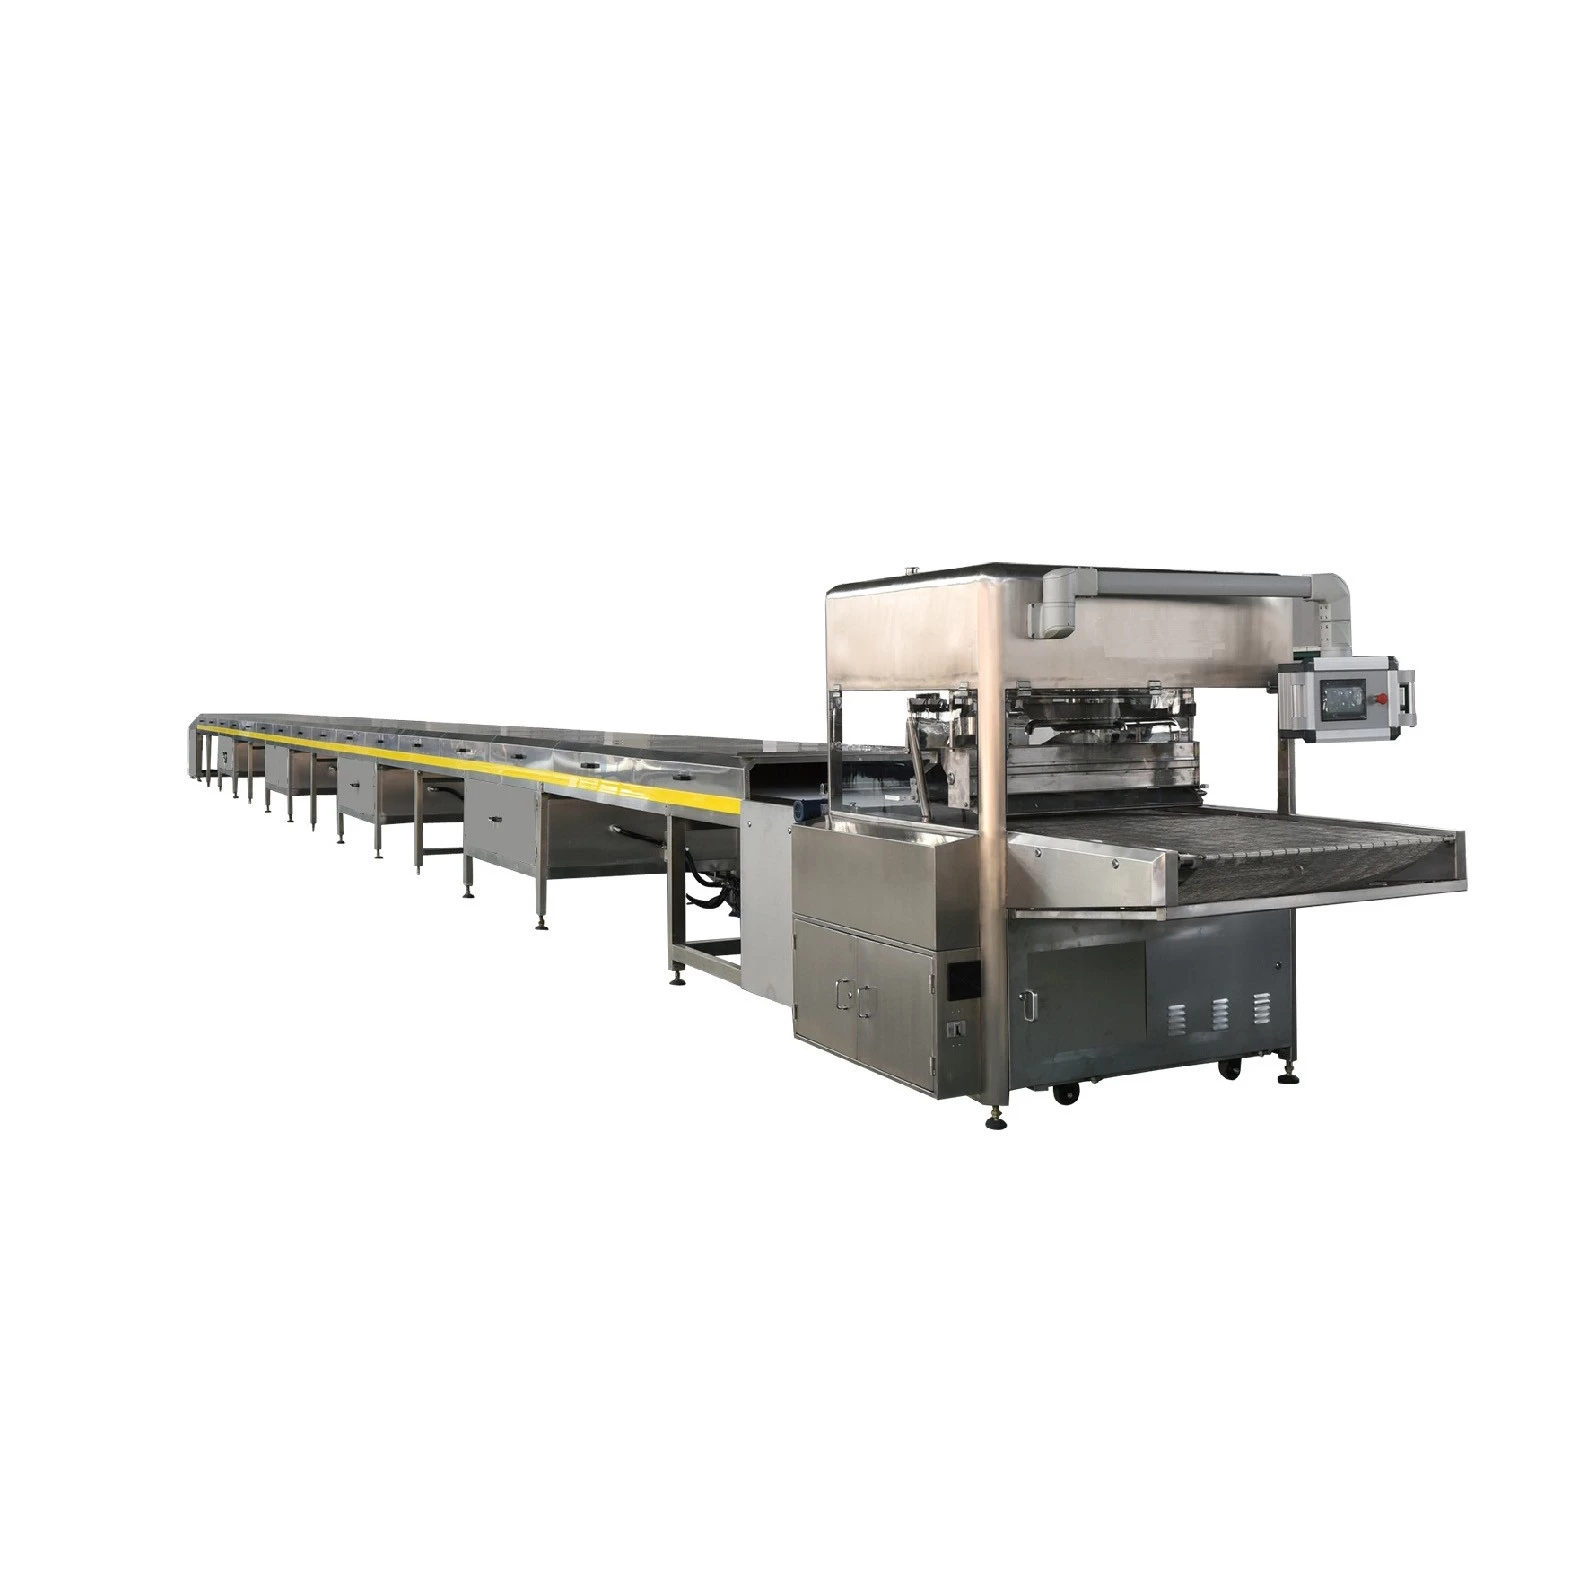 中國 SJP400 series chocolate enrobing machine/chocolate coating machine/enrobing line 製造商